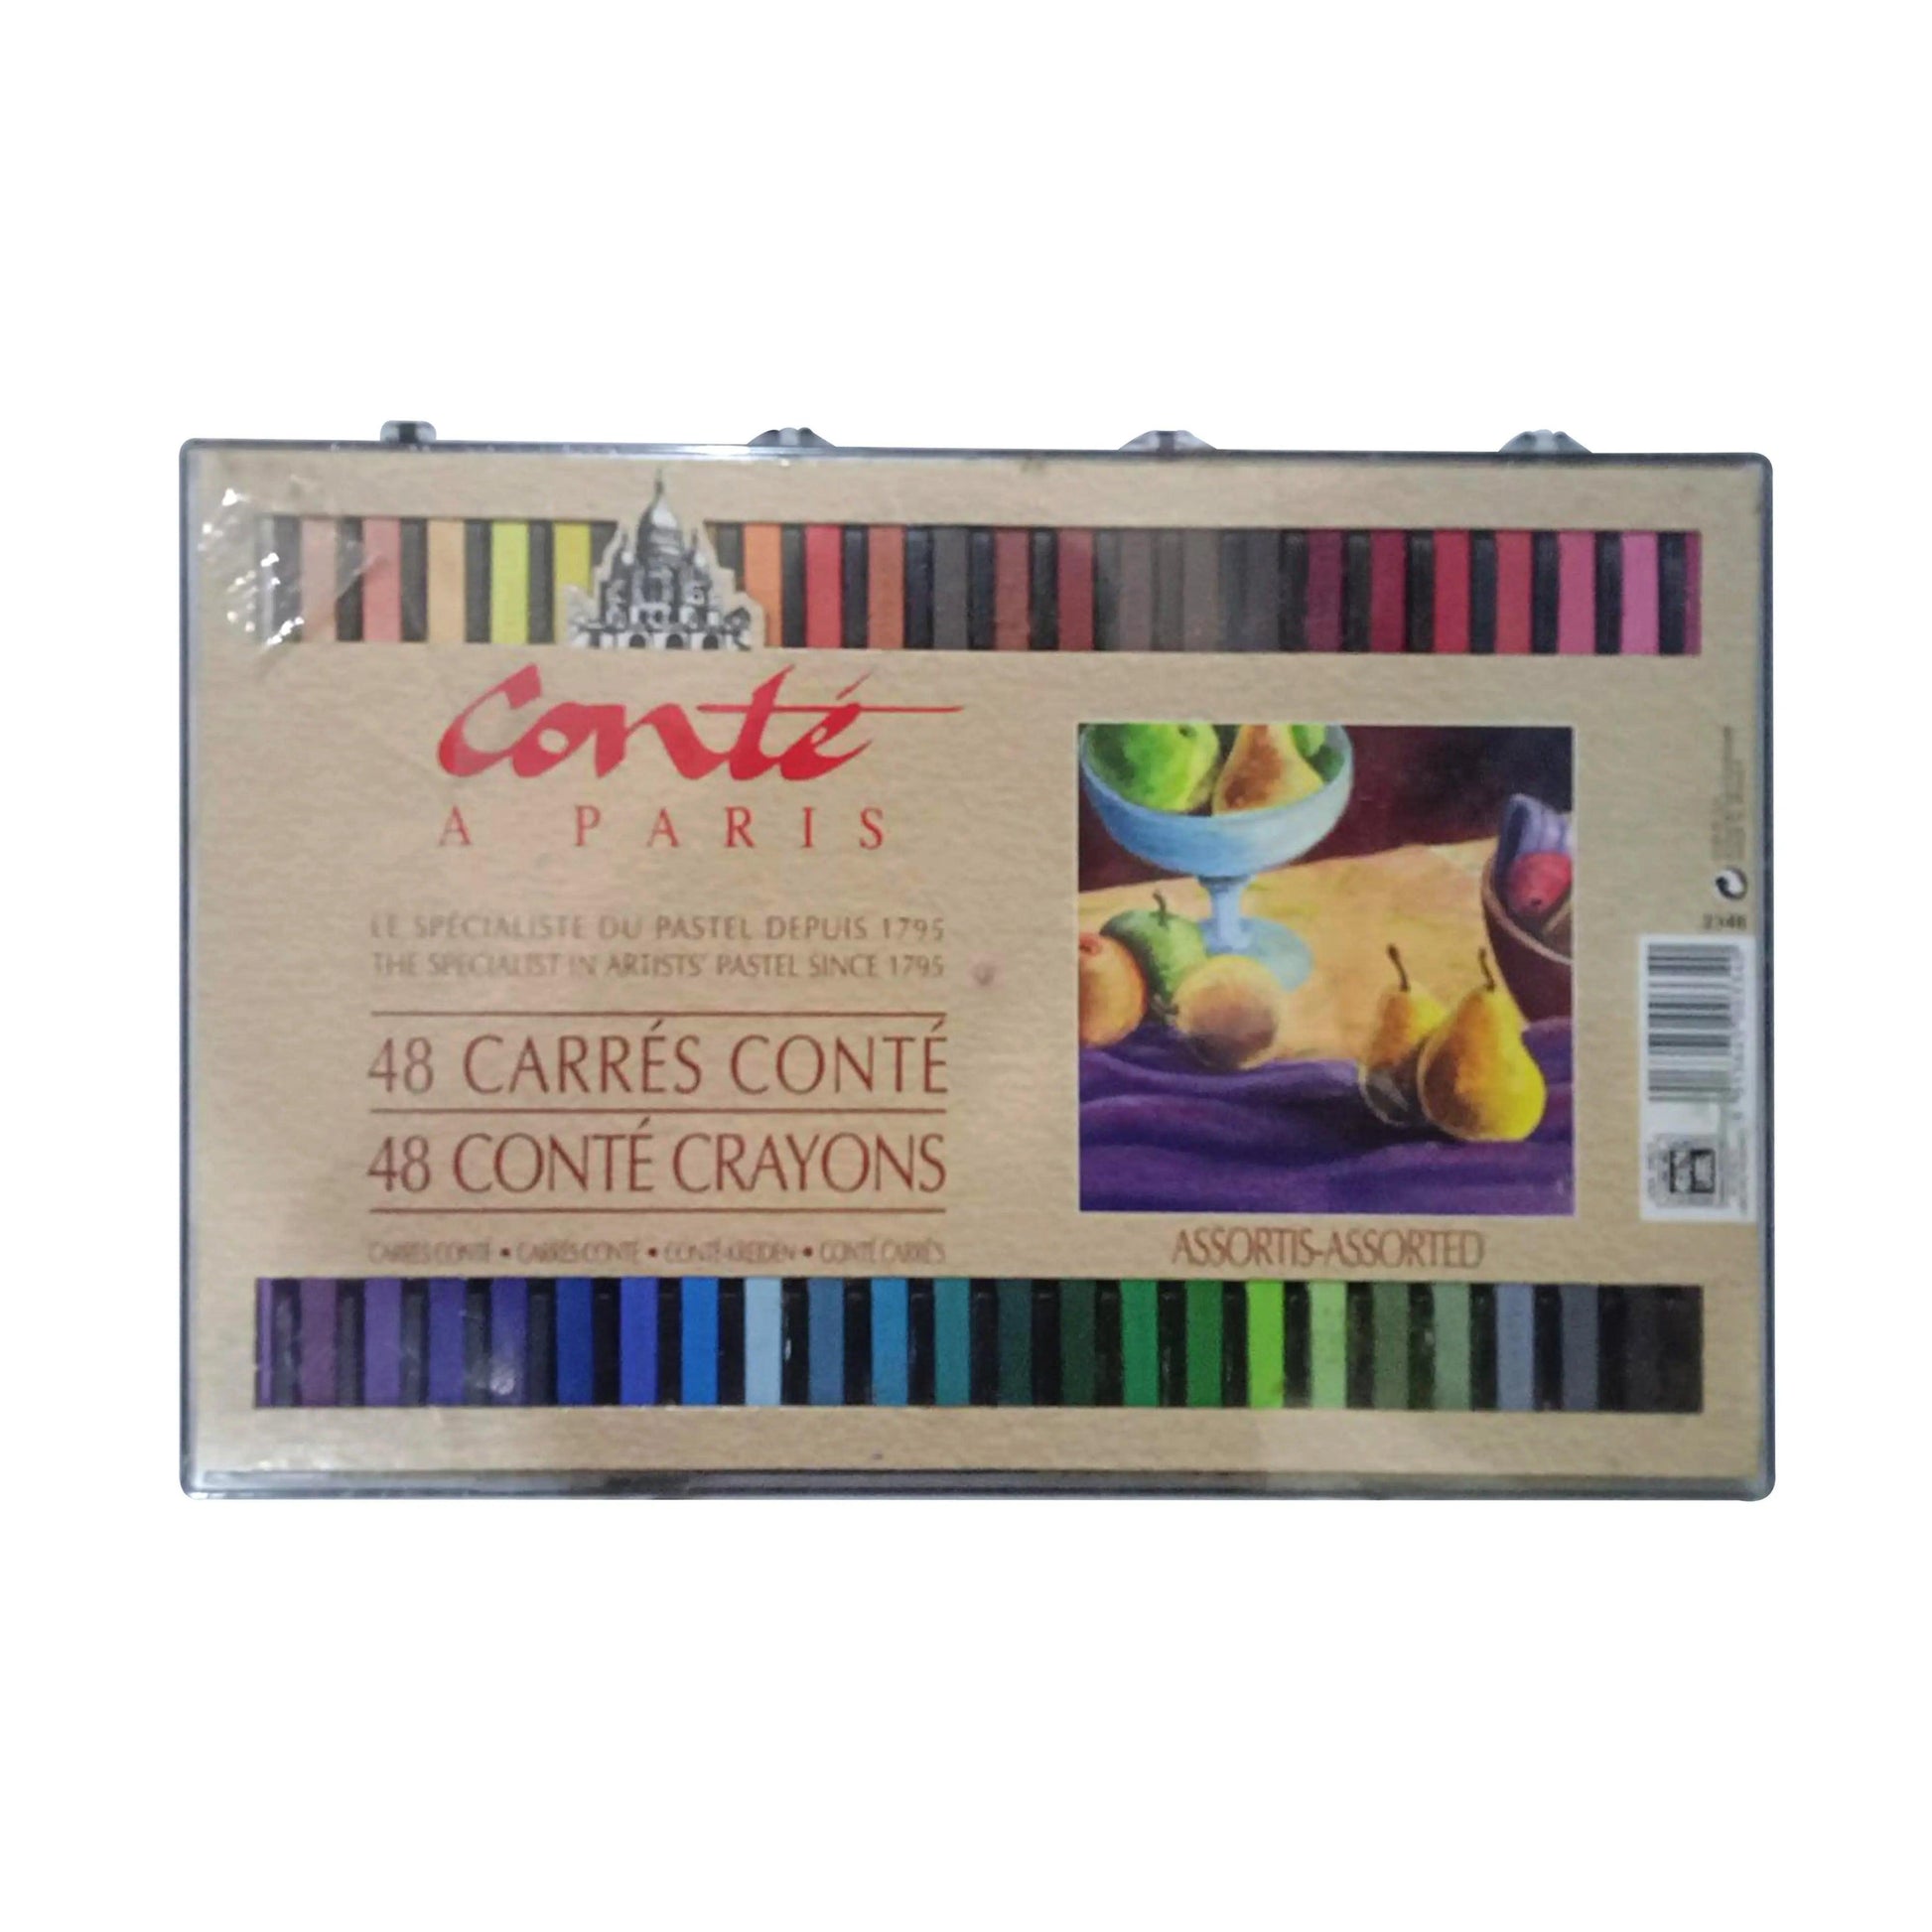 Conte A Paris Conte Crayons The Stationers